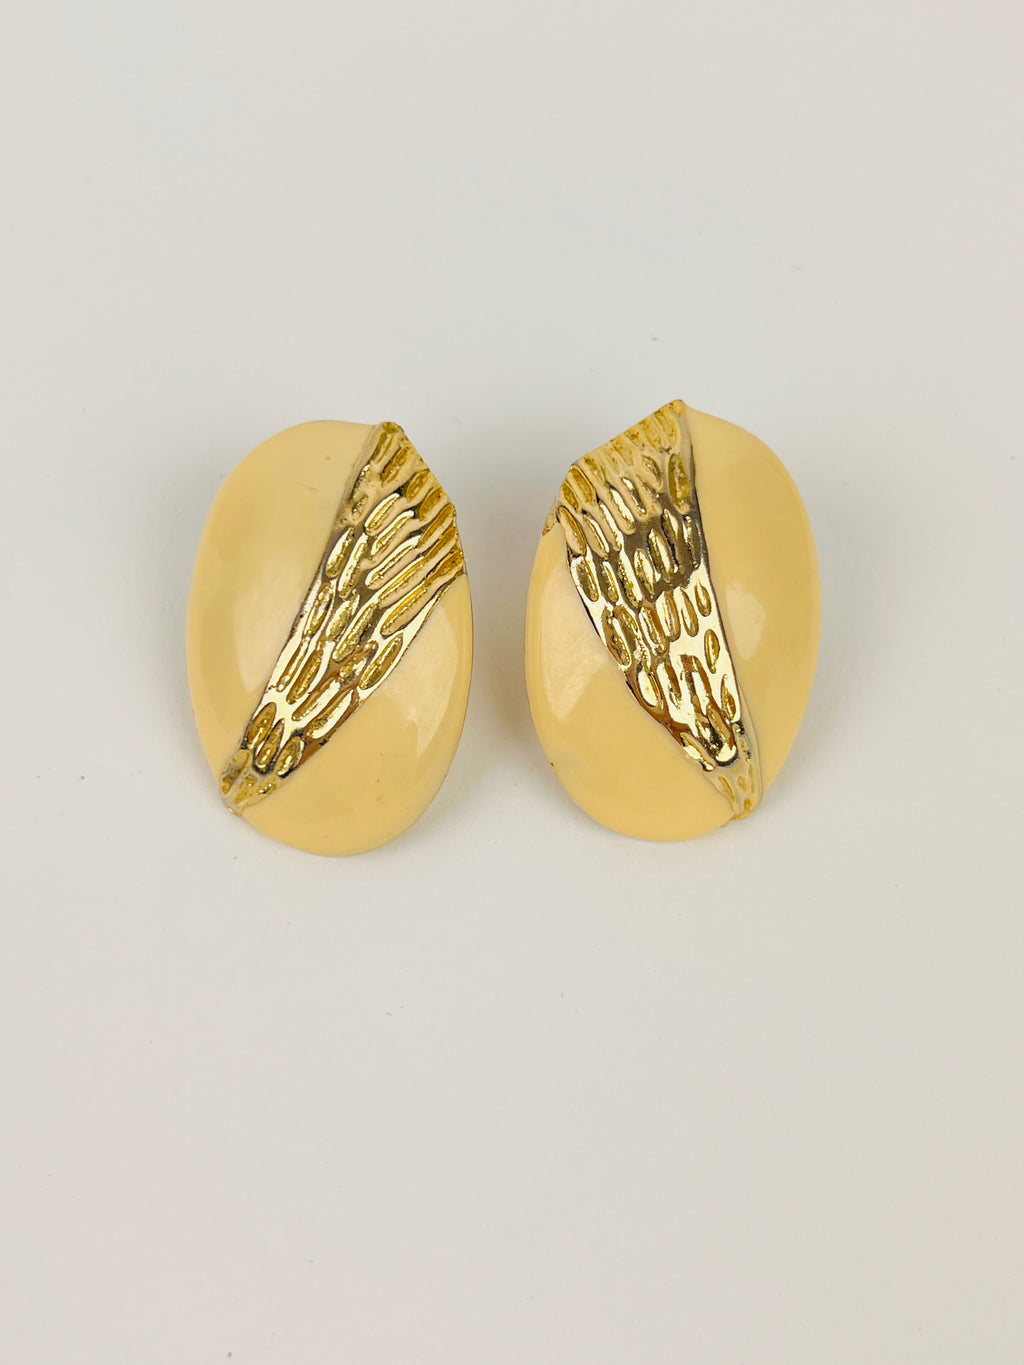 Vintage Enameled Oval Earrings